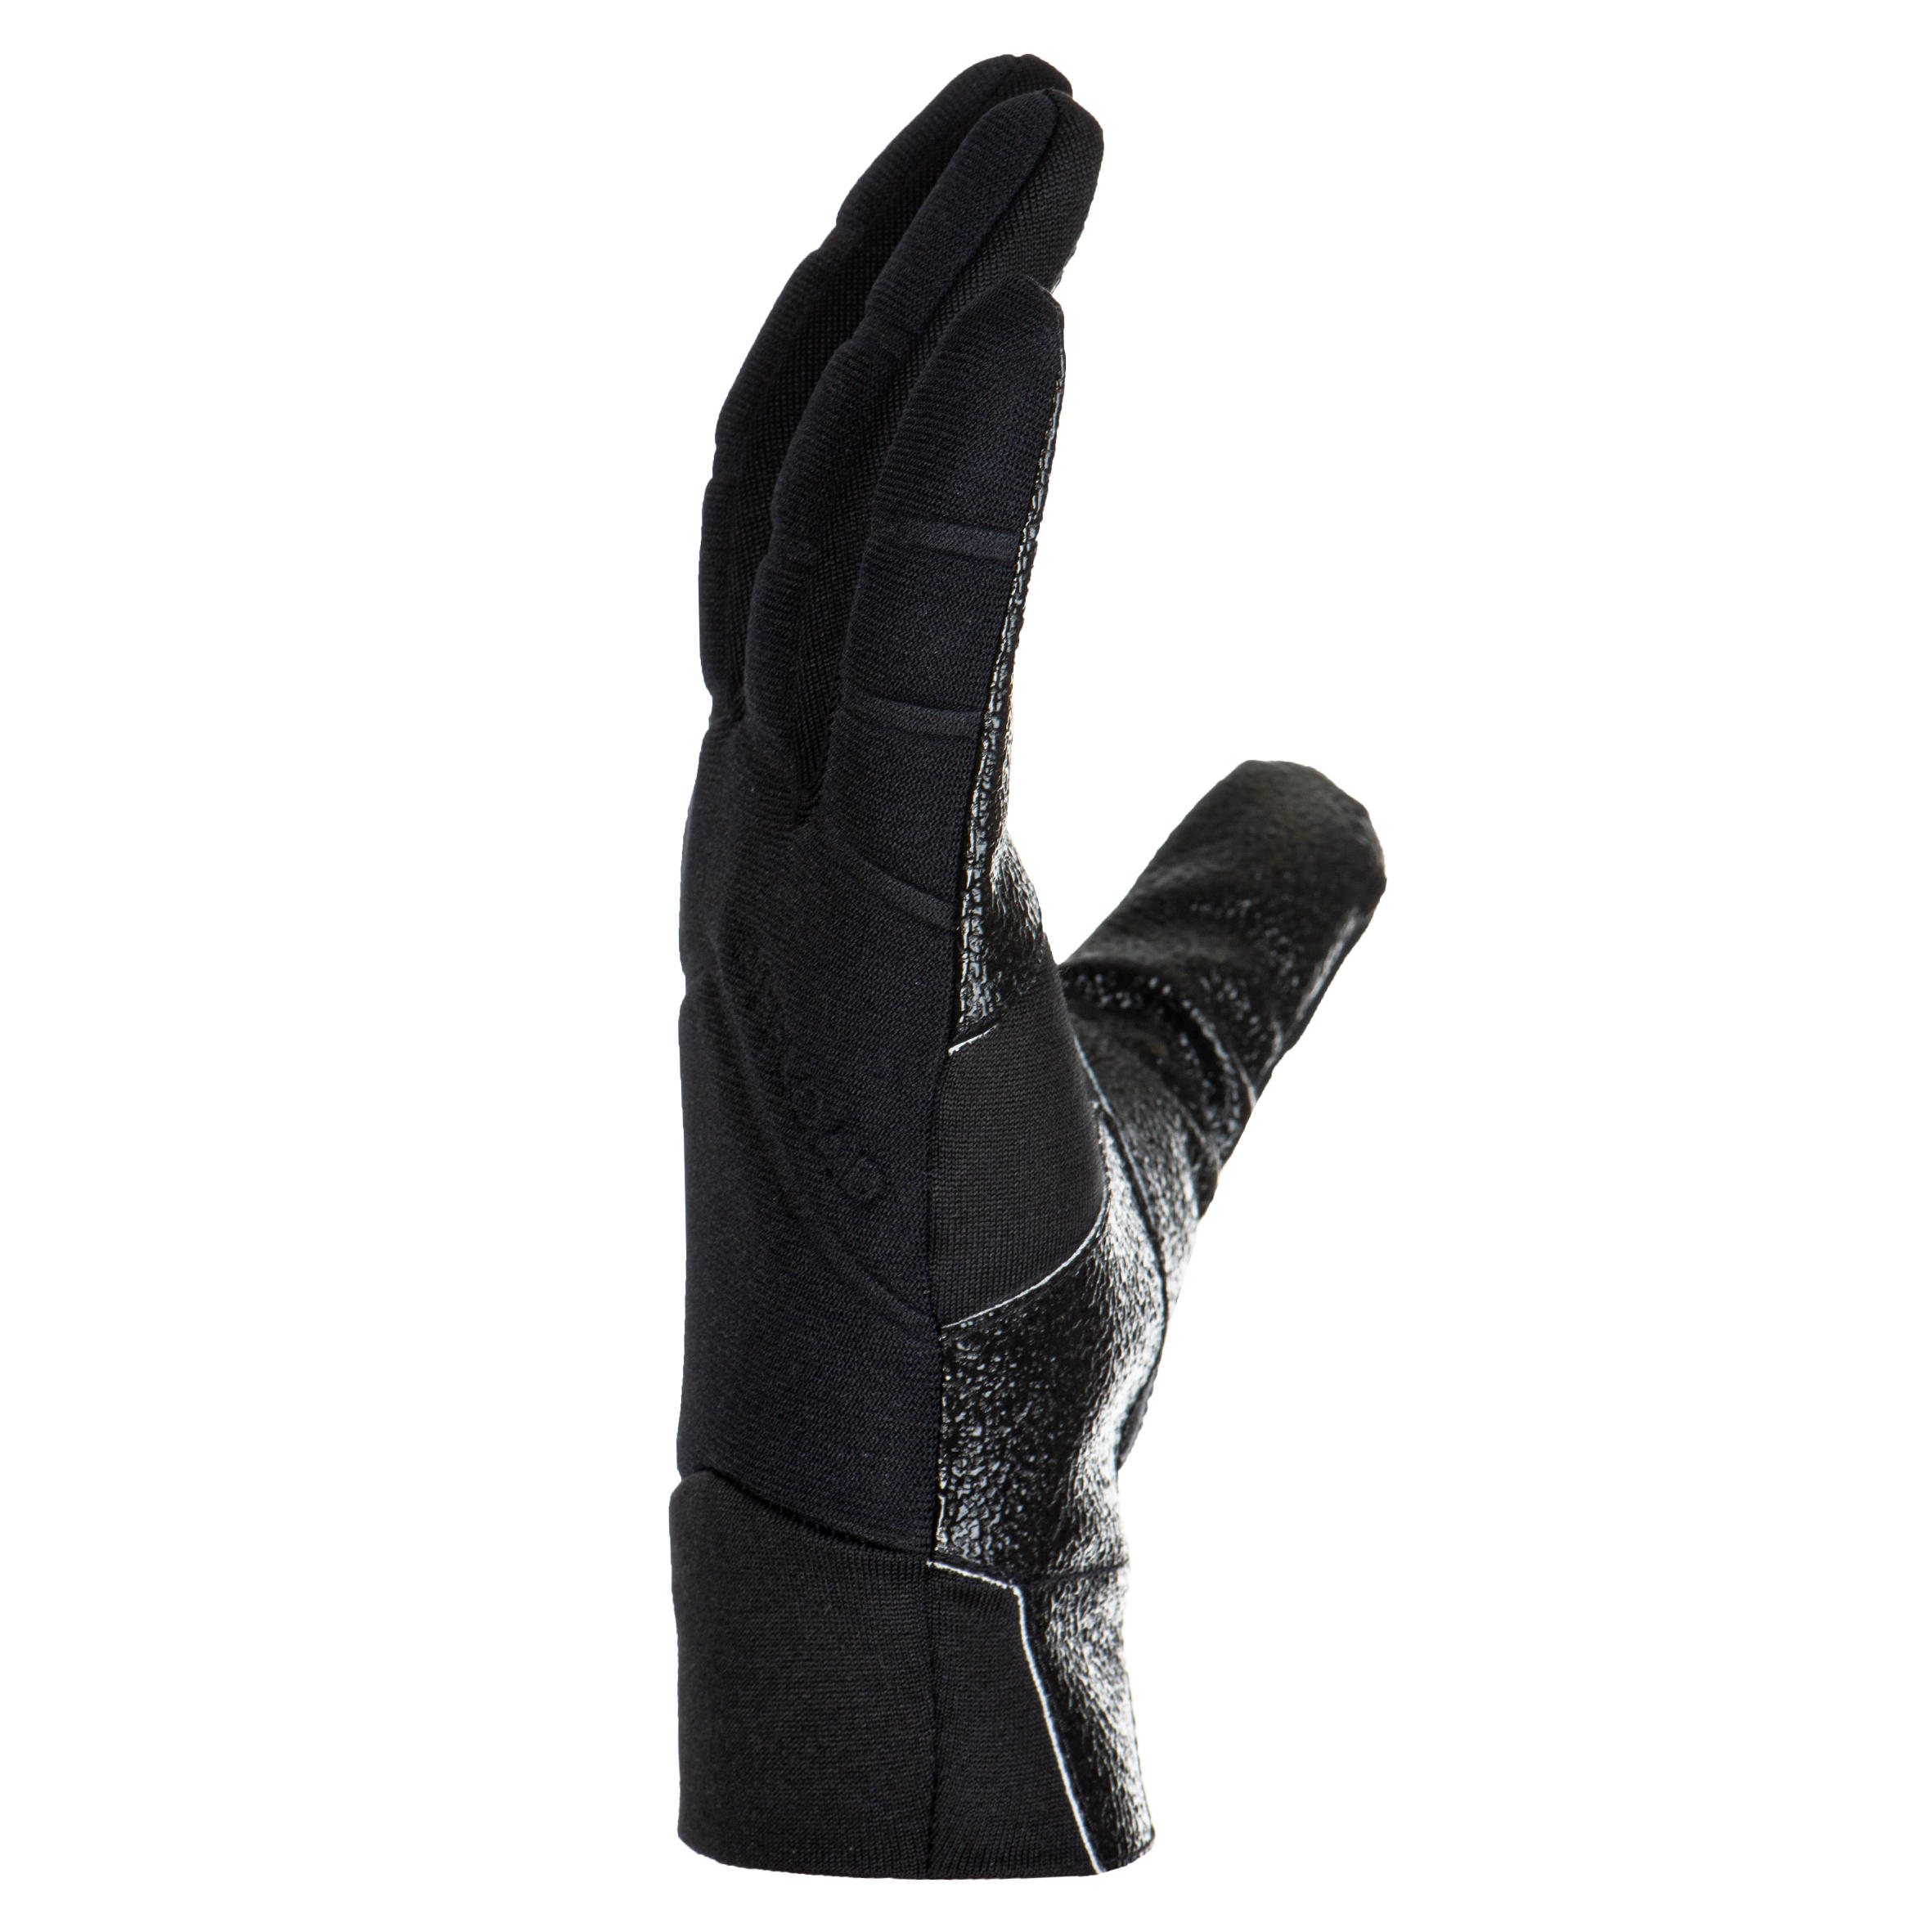 R500 Adult Winter Rugby Gloves - Black 2/8